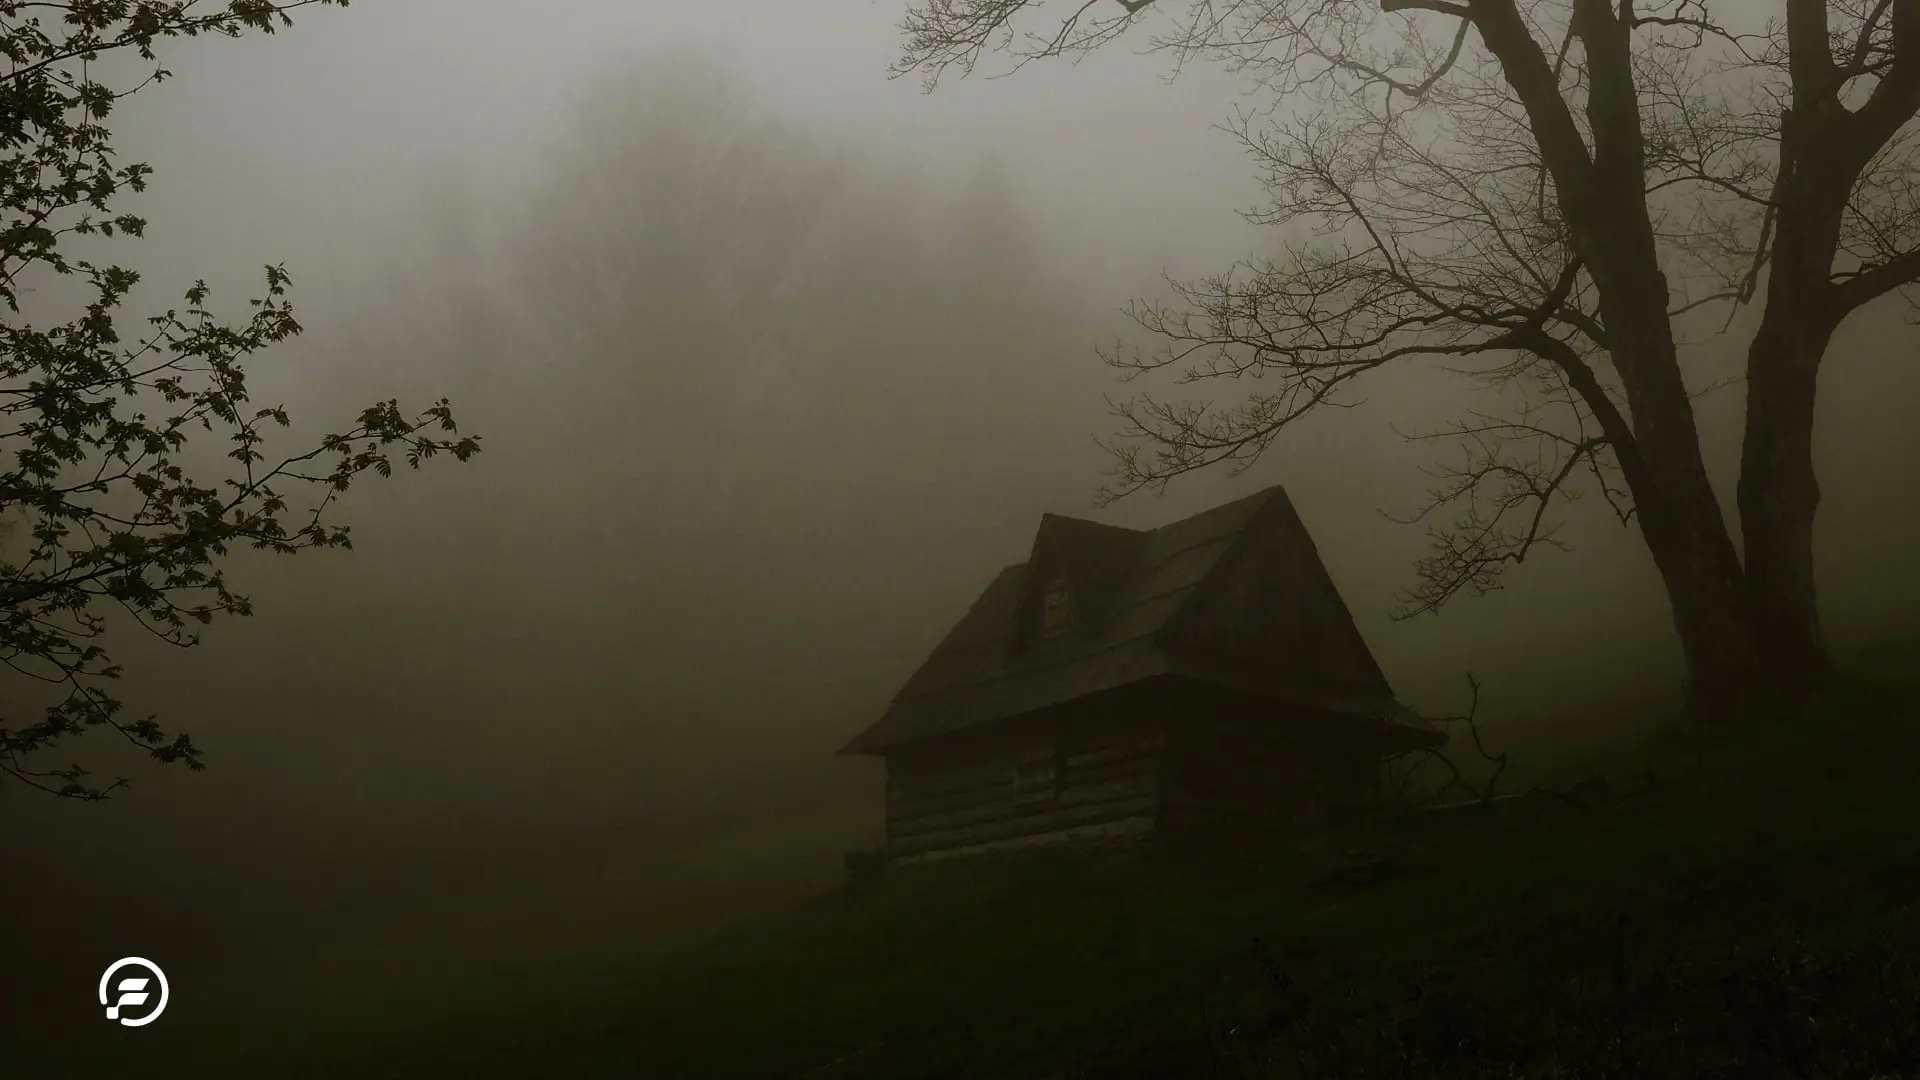 A spooky house in fog.